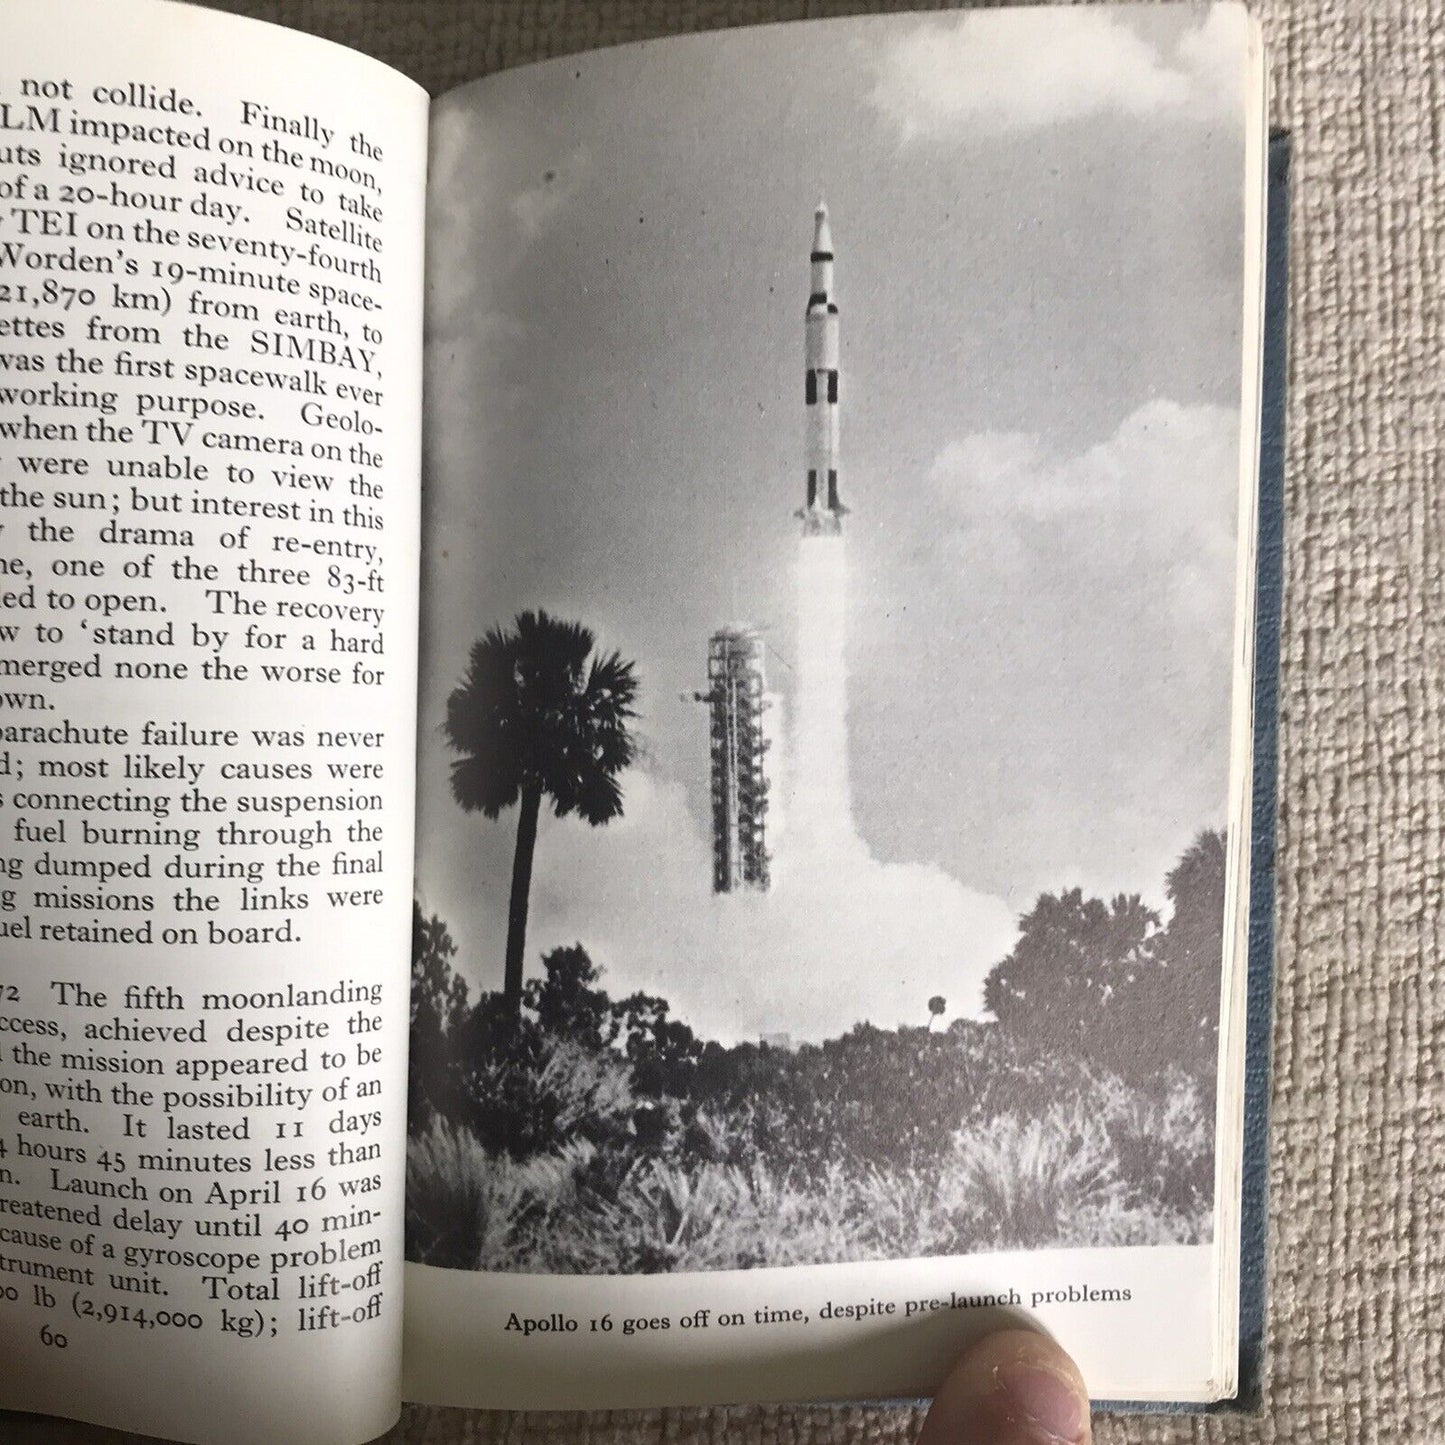 1972*1.*Observer's Book of Manned Space Flight von Reginald Turnill